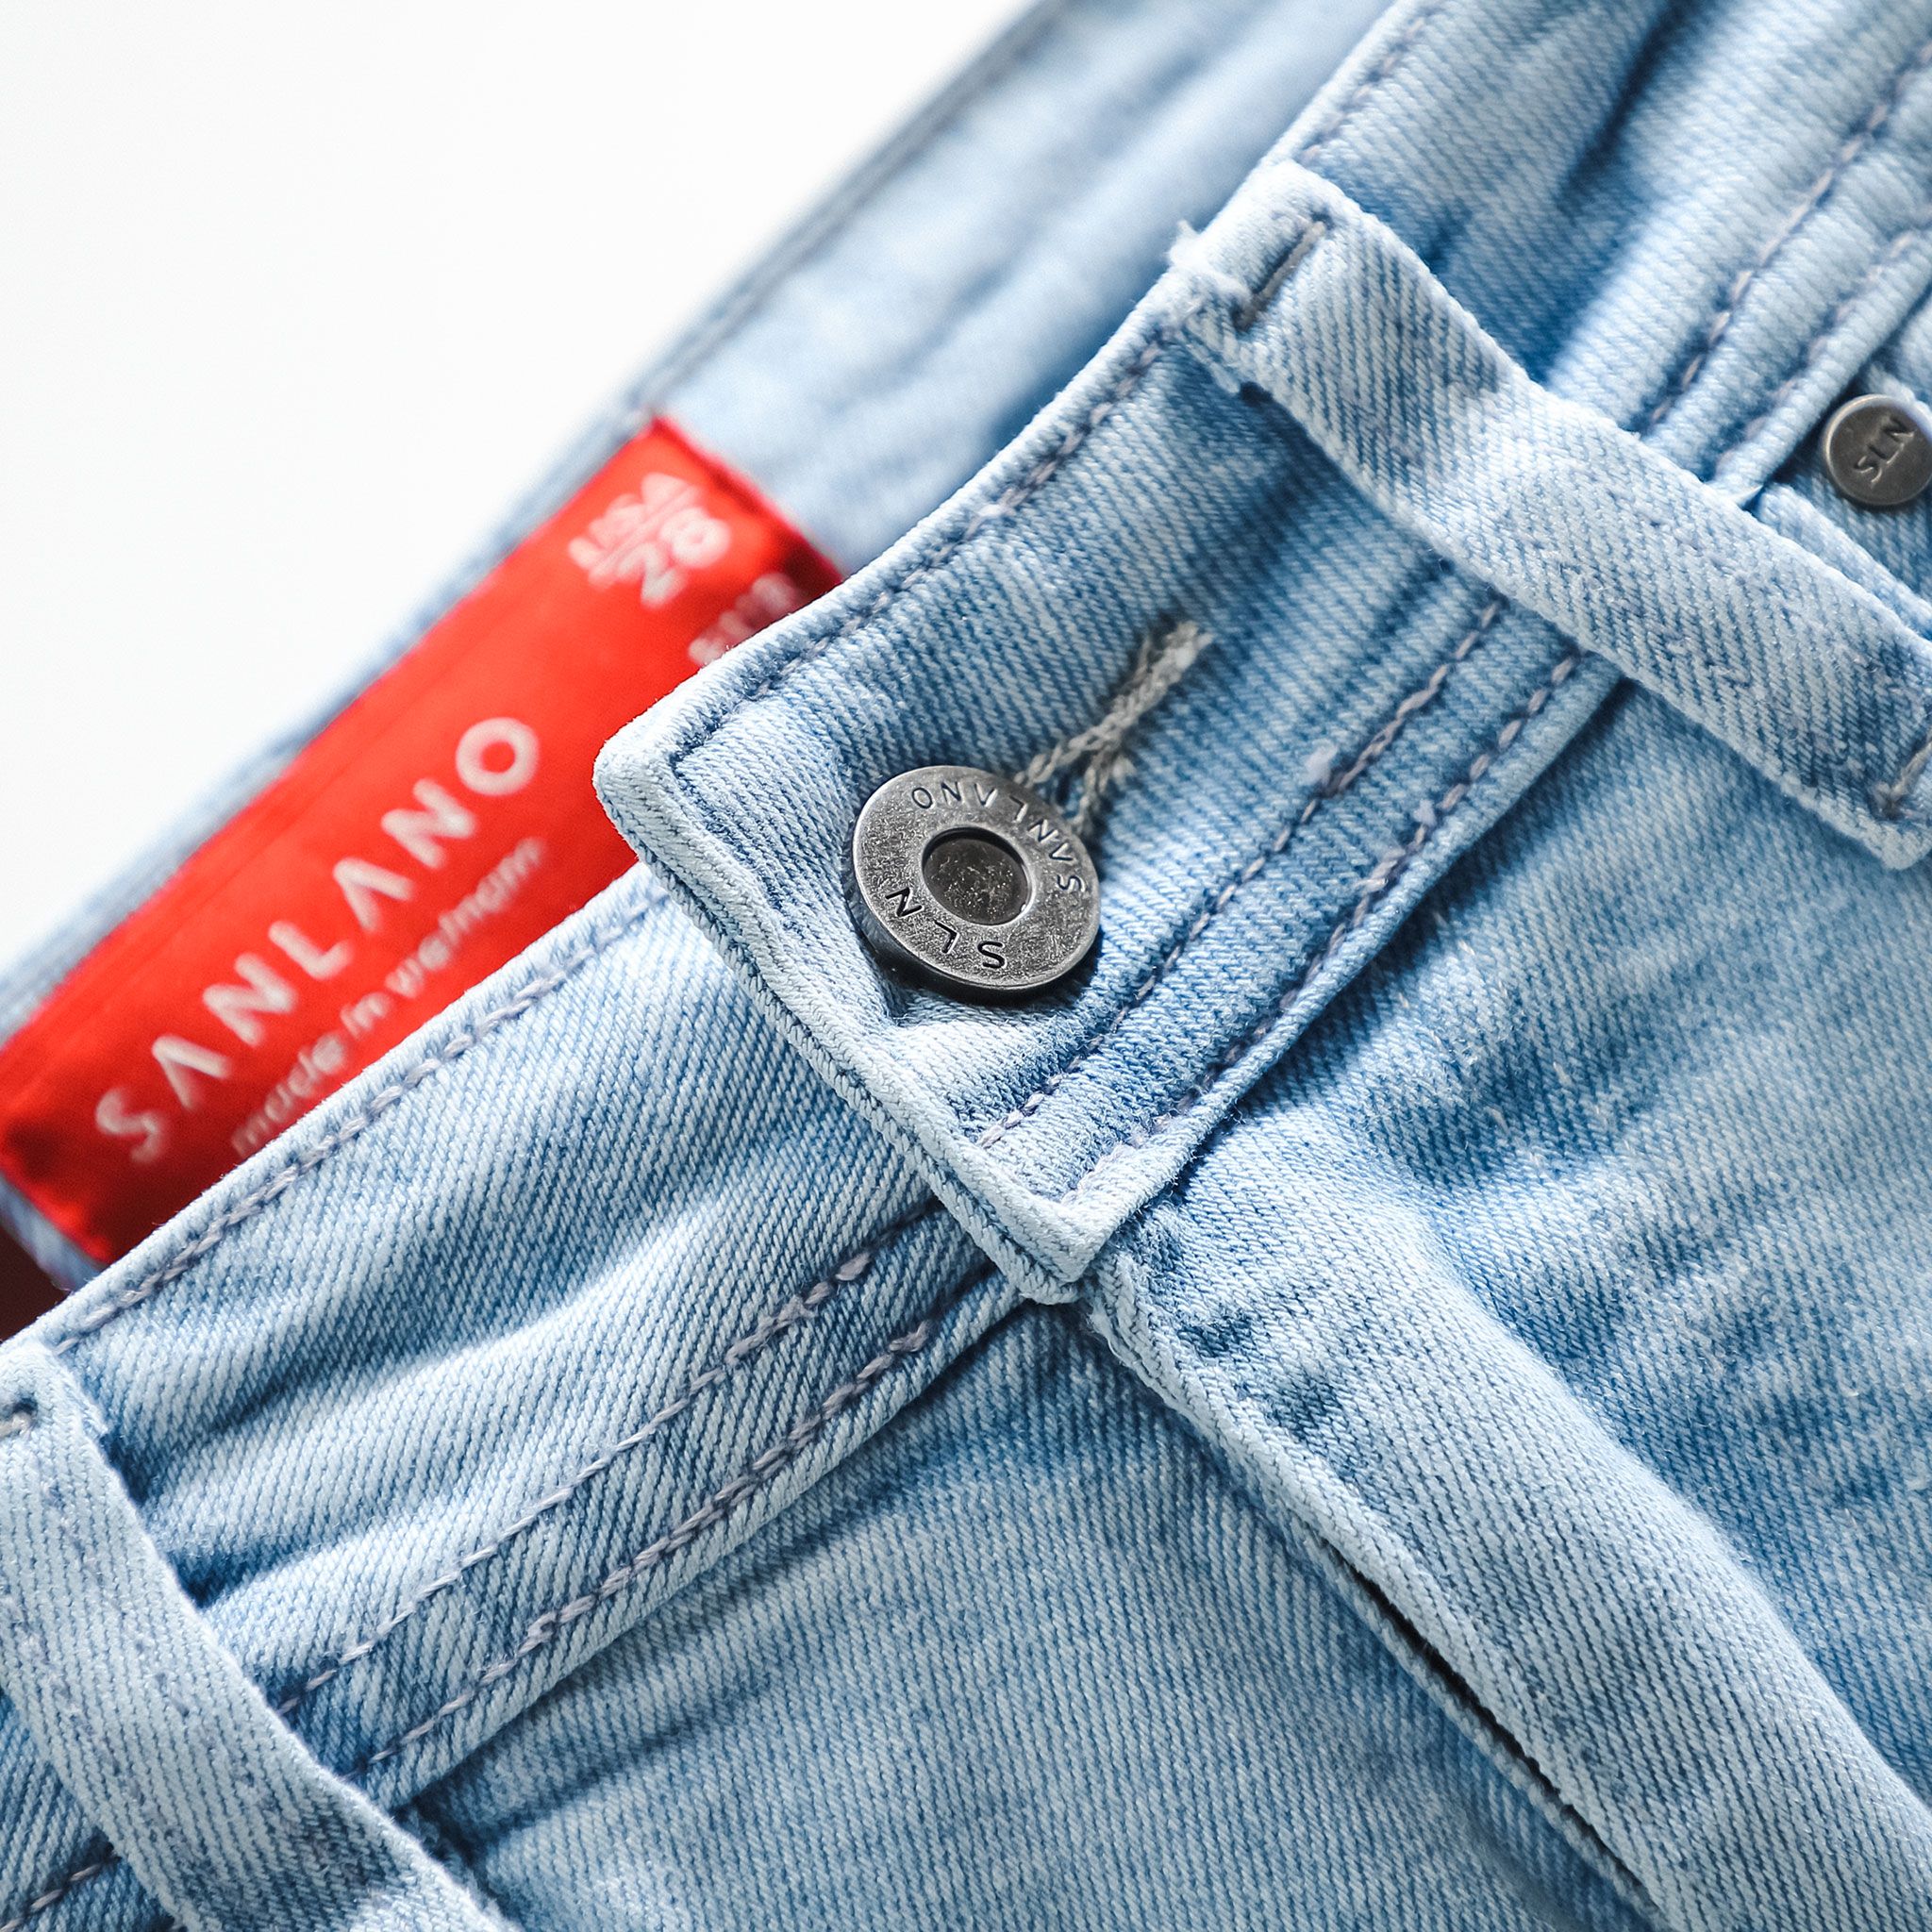  Jeans SANLANO Xanh nhạt 0119 